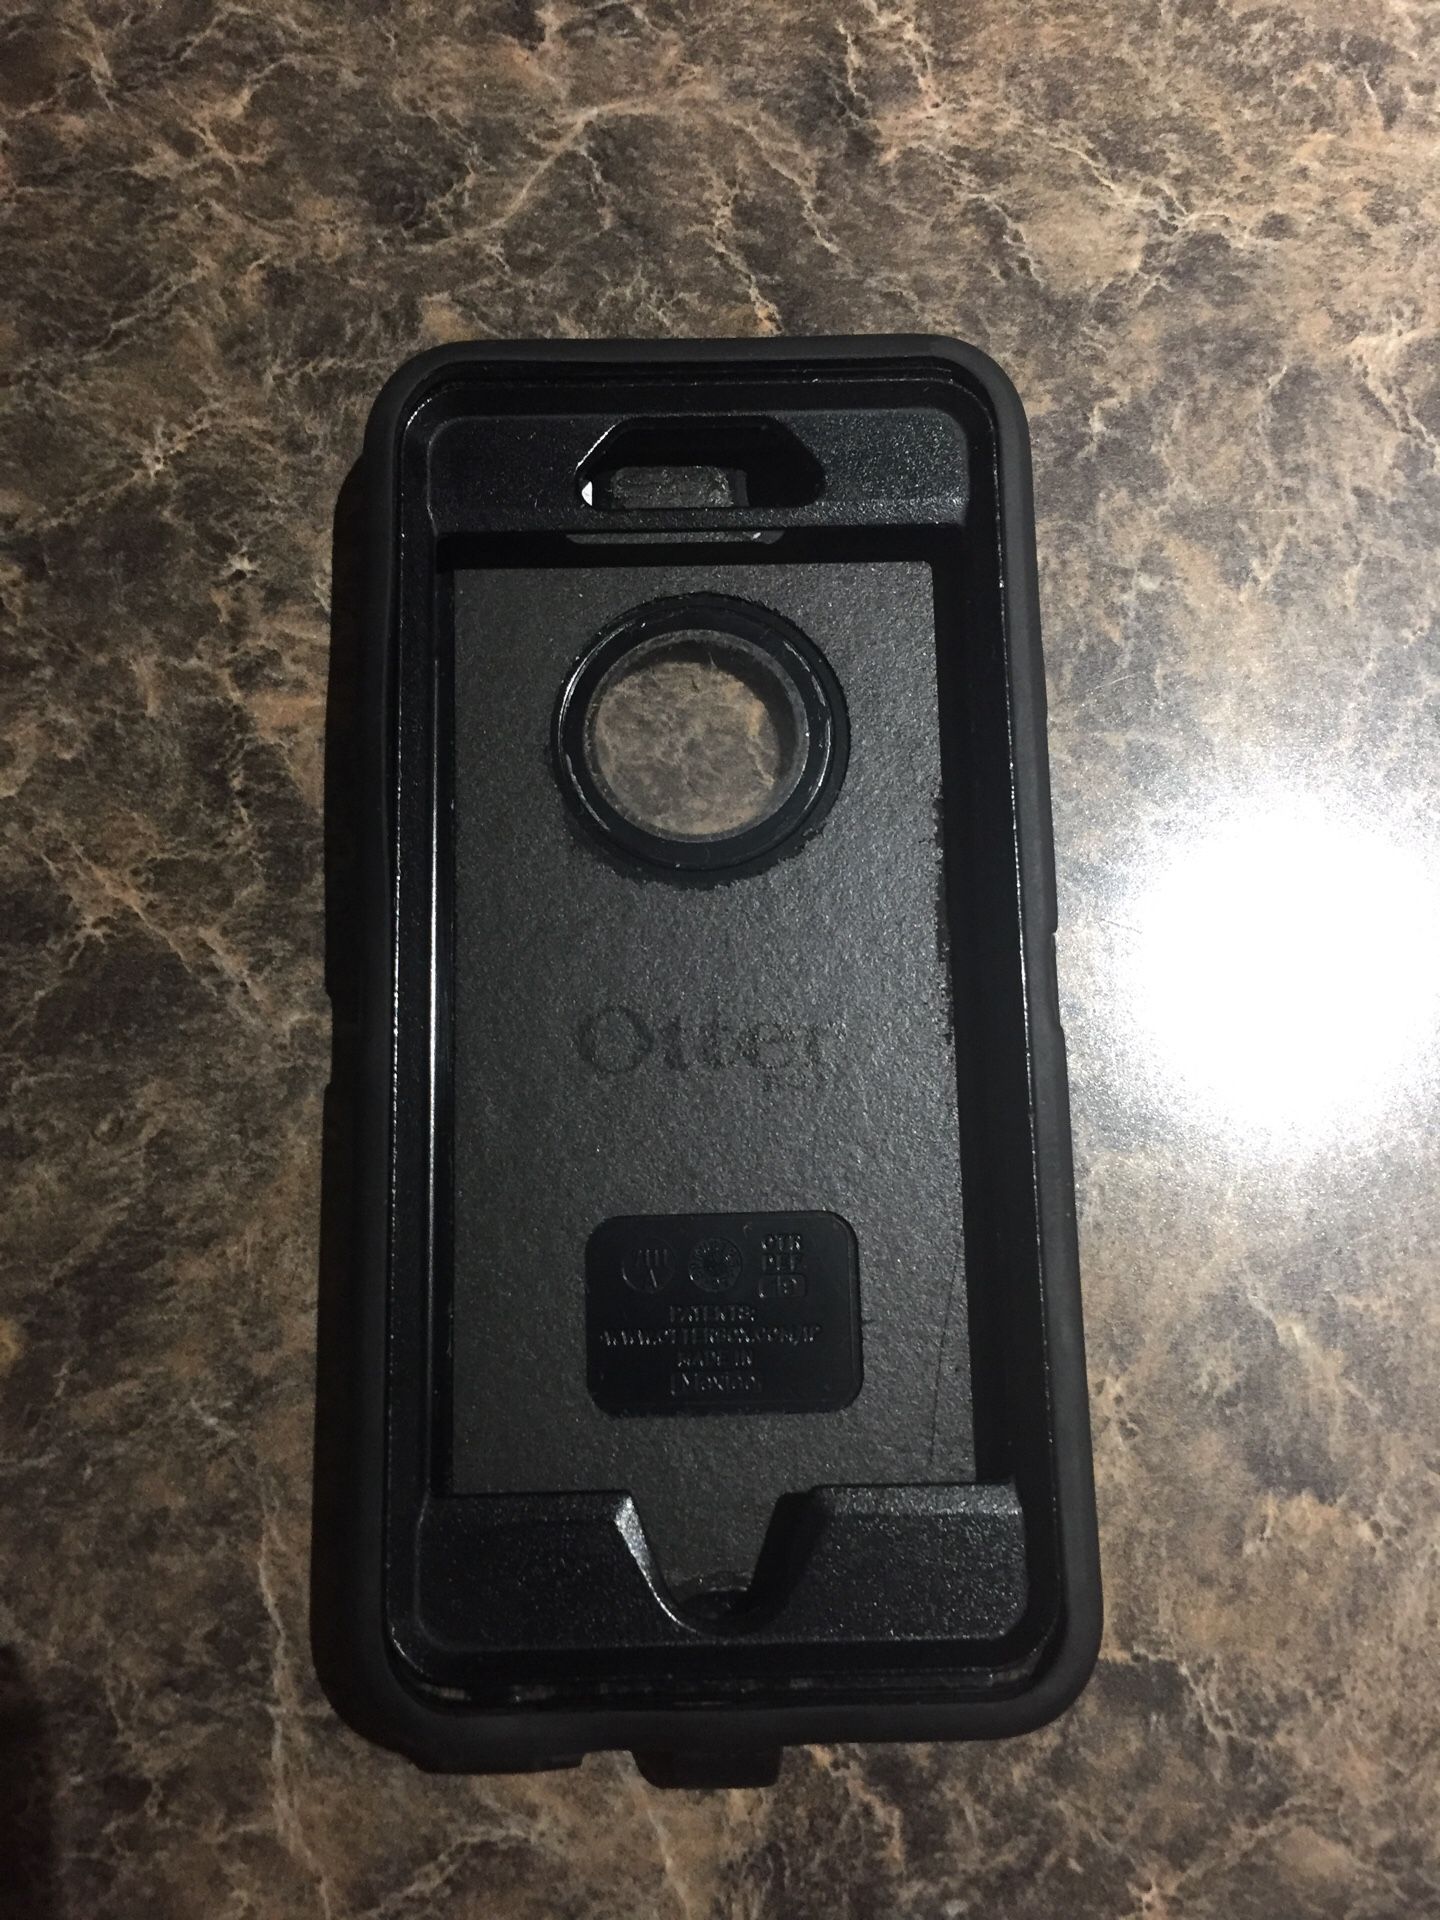 iPhone 6 OtterBox defender case $10